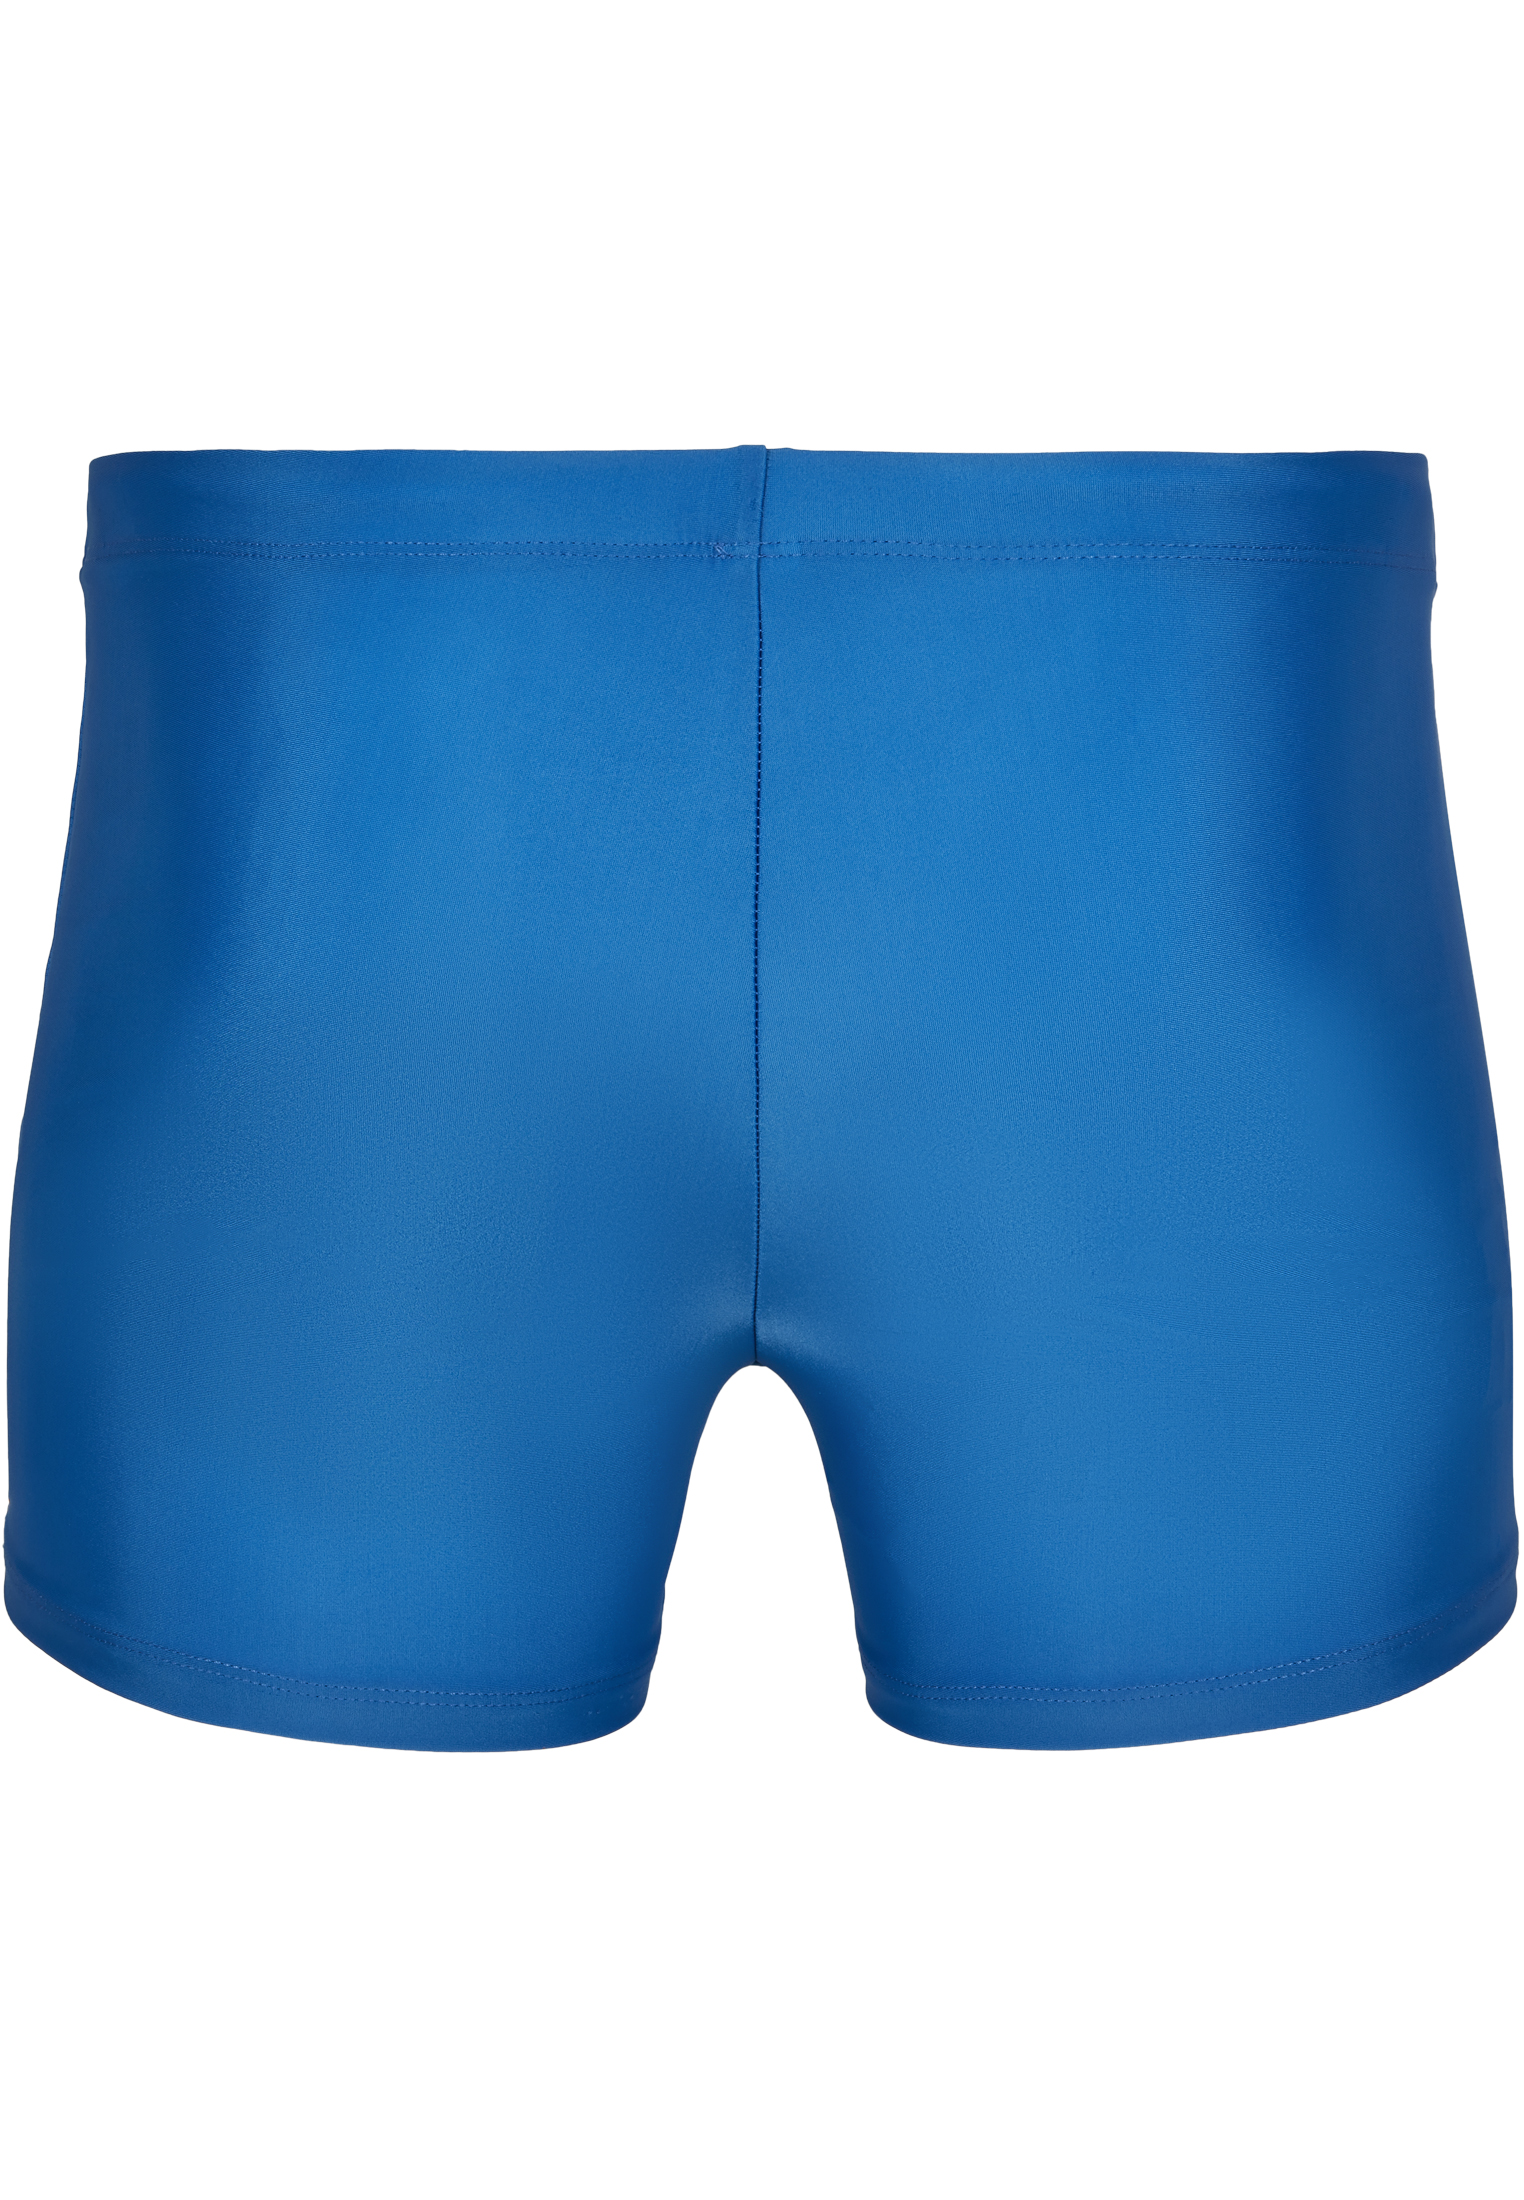 Bademode Basic Swim Trunk in Farbe cobalt blue